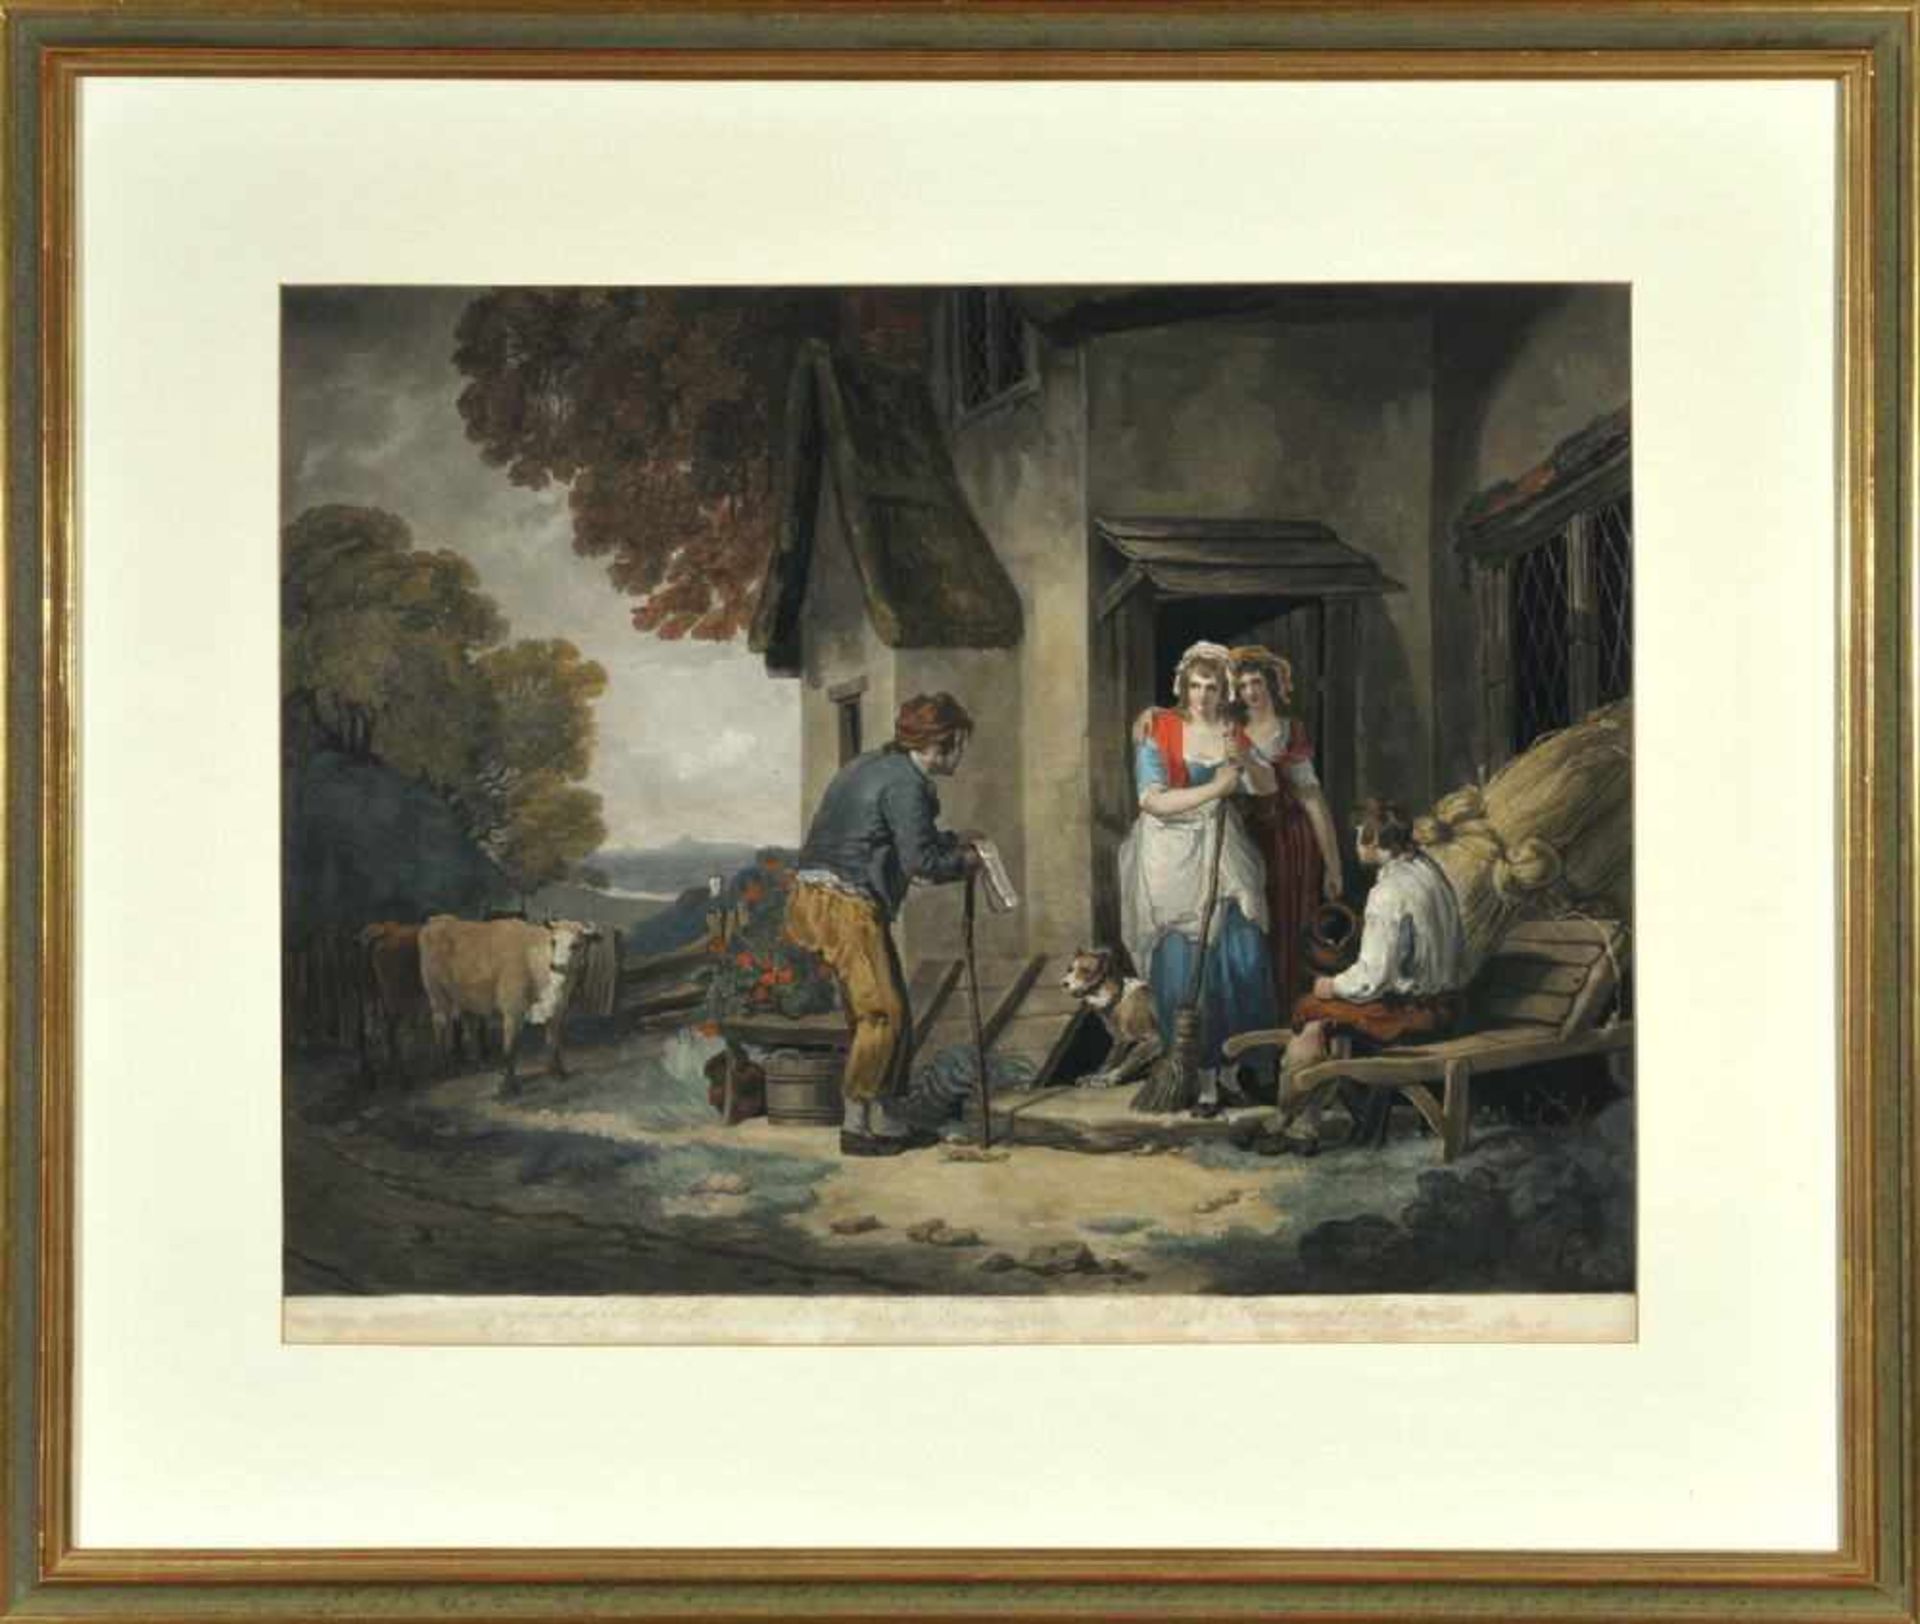 Keating, Georges (George), 1762 Irland - 1842 LondonMezzotinto-Radierung, ca. 48 x 64 cm, betit. "